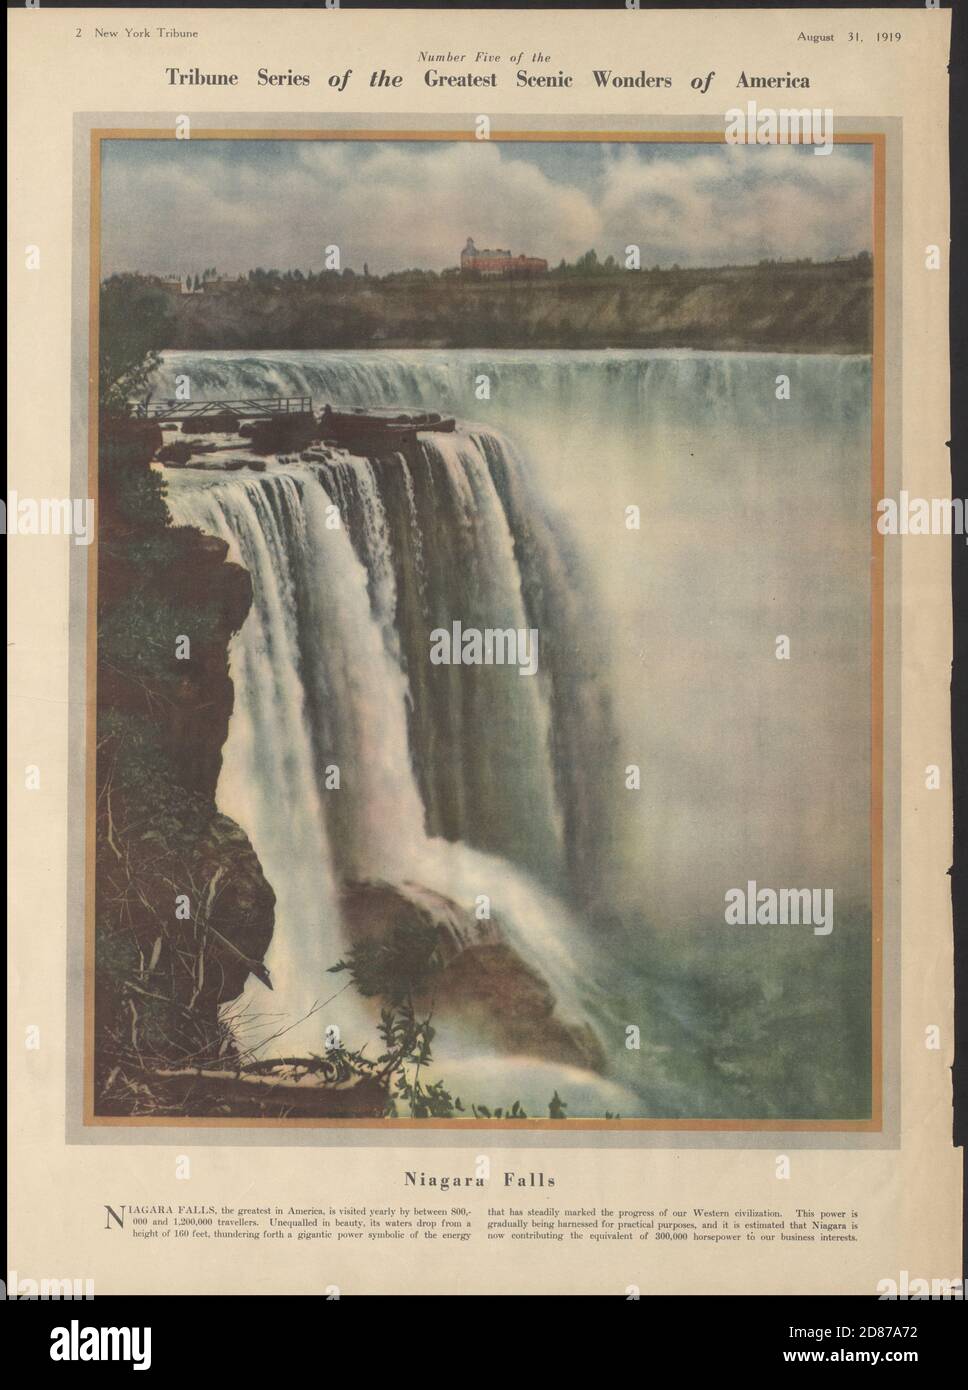 Niagara Falls, Ontario, New York Tribune page, Tribune Series of the Greatest Scenic Wonders of America, cascata. Agosto 31, 1919. Foto Stock